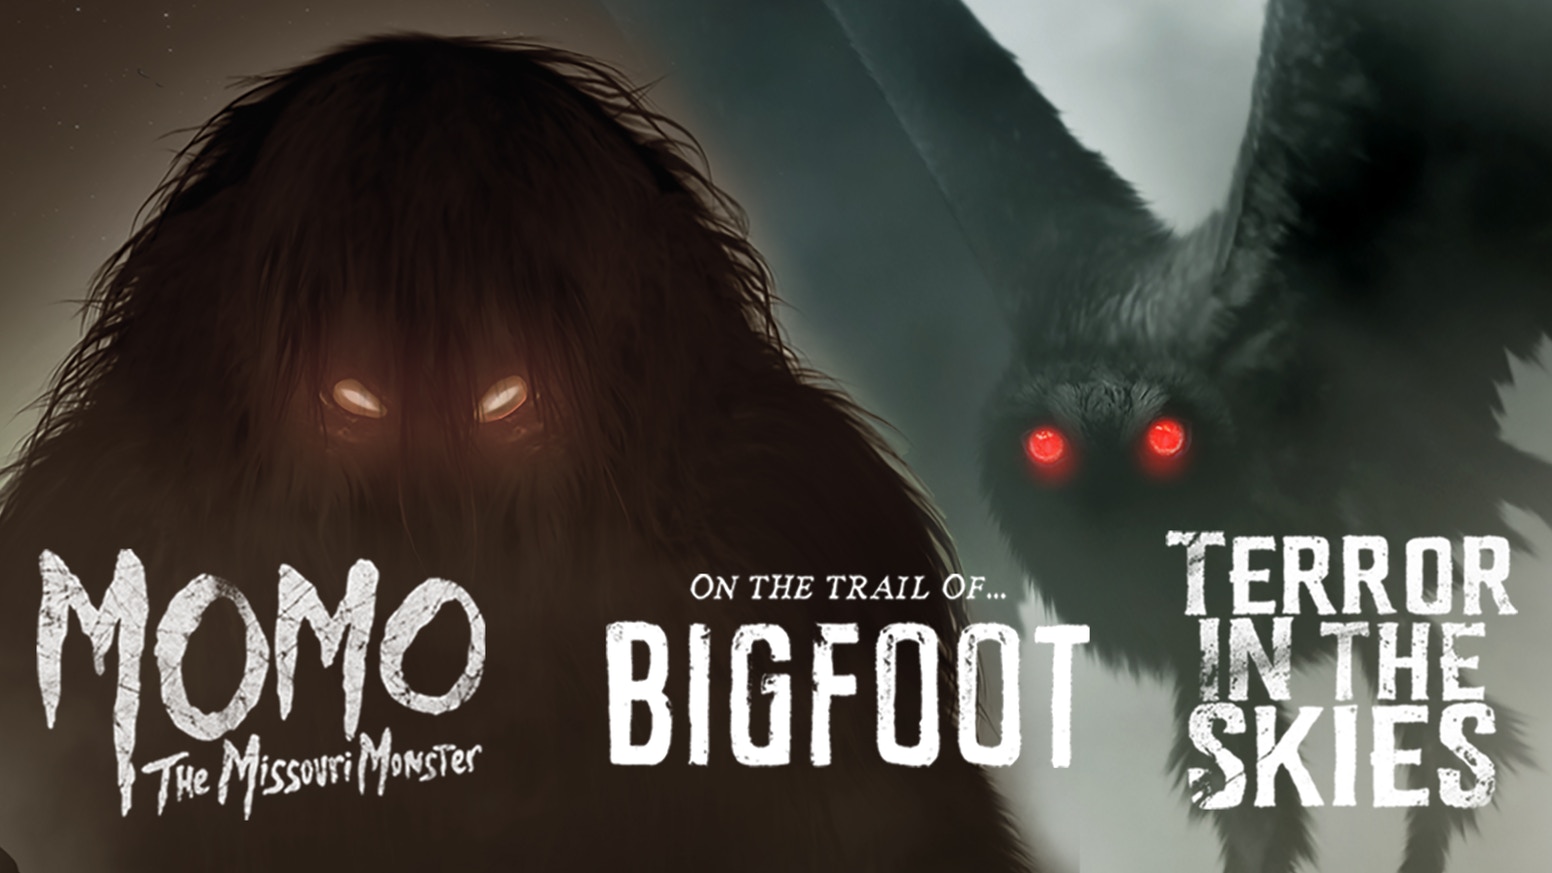 Film Review: “MOMO: The Missouri Monster” - Terrain Magazine